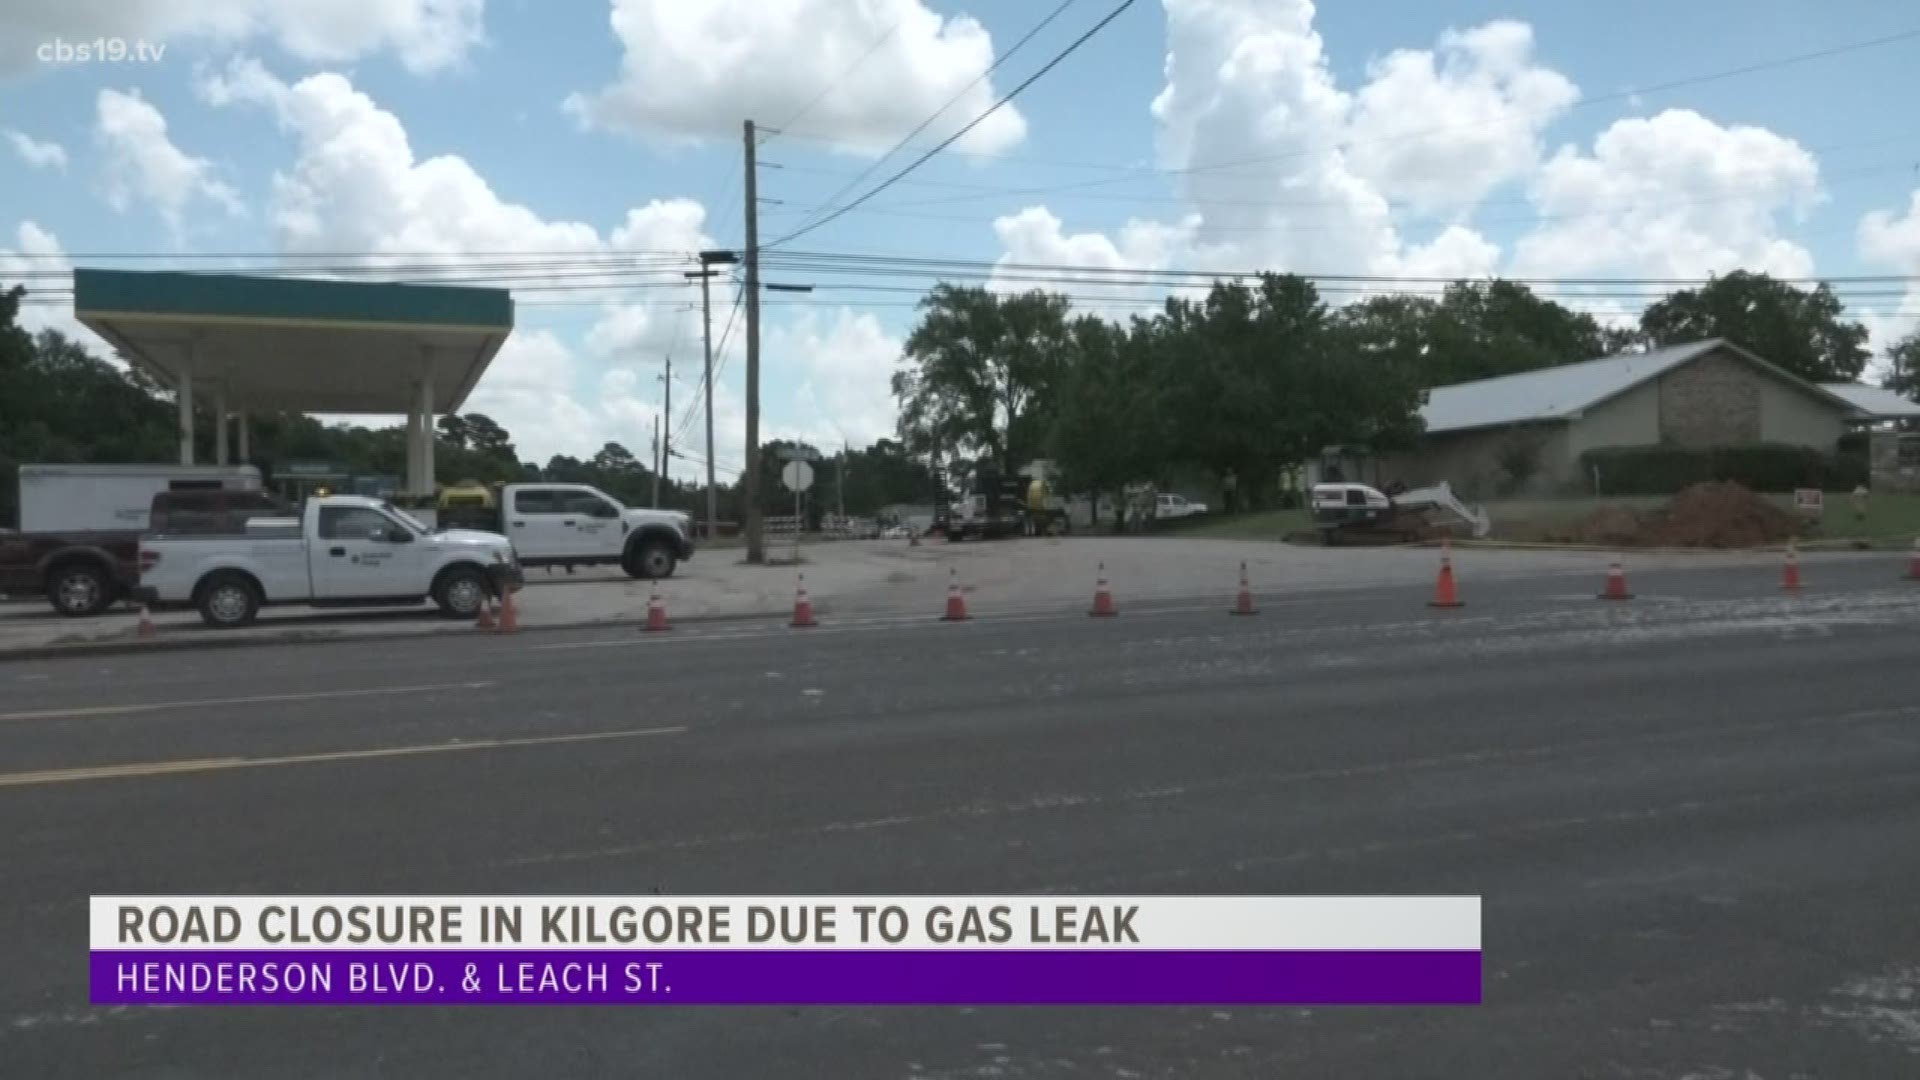 A gas leak has caused a road closure in Kilgore.